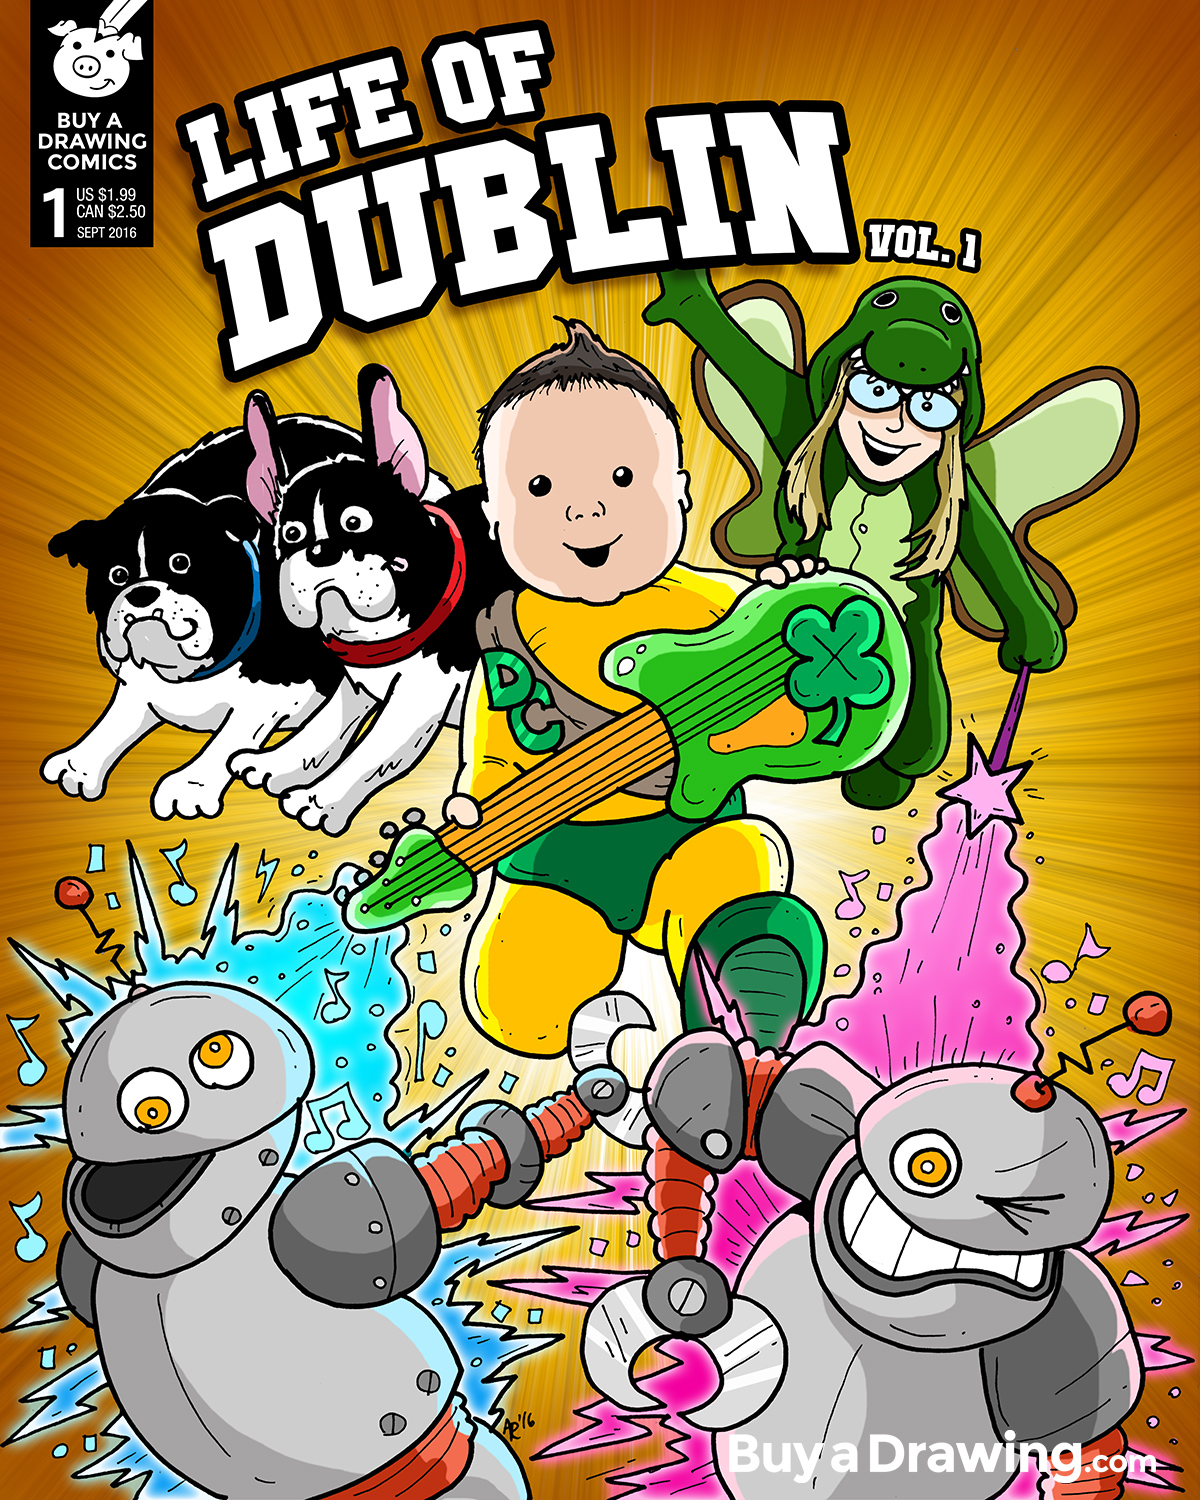 The Life of Dublin Vol. 1 Comic Book Cover